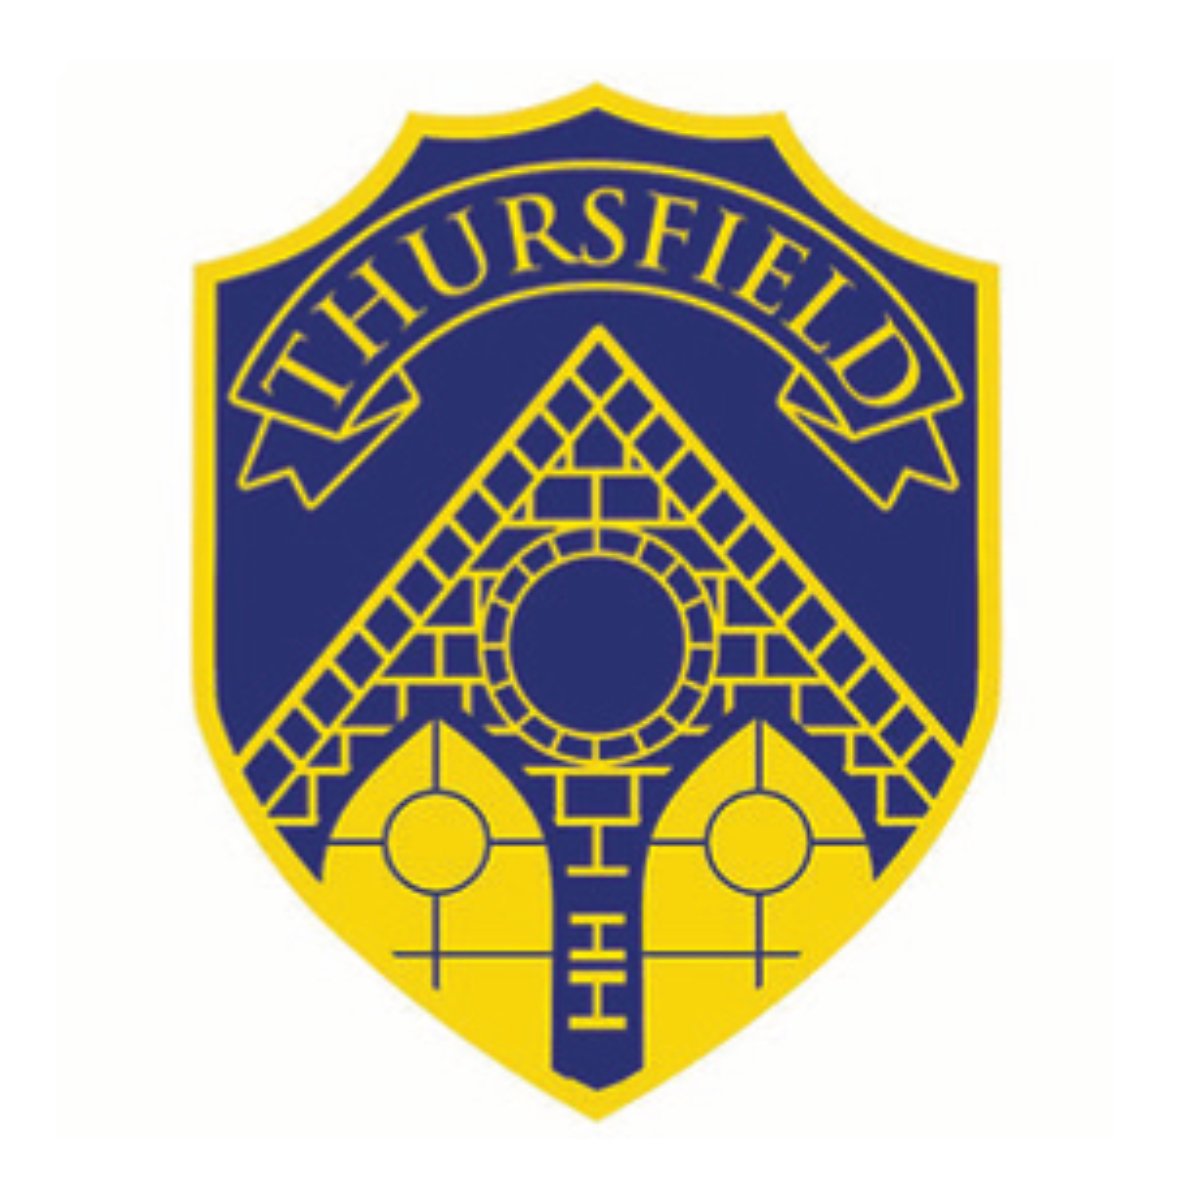 Thursfield Primary School